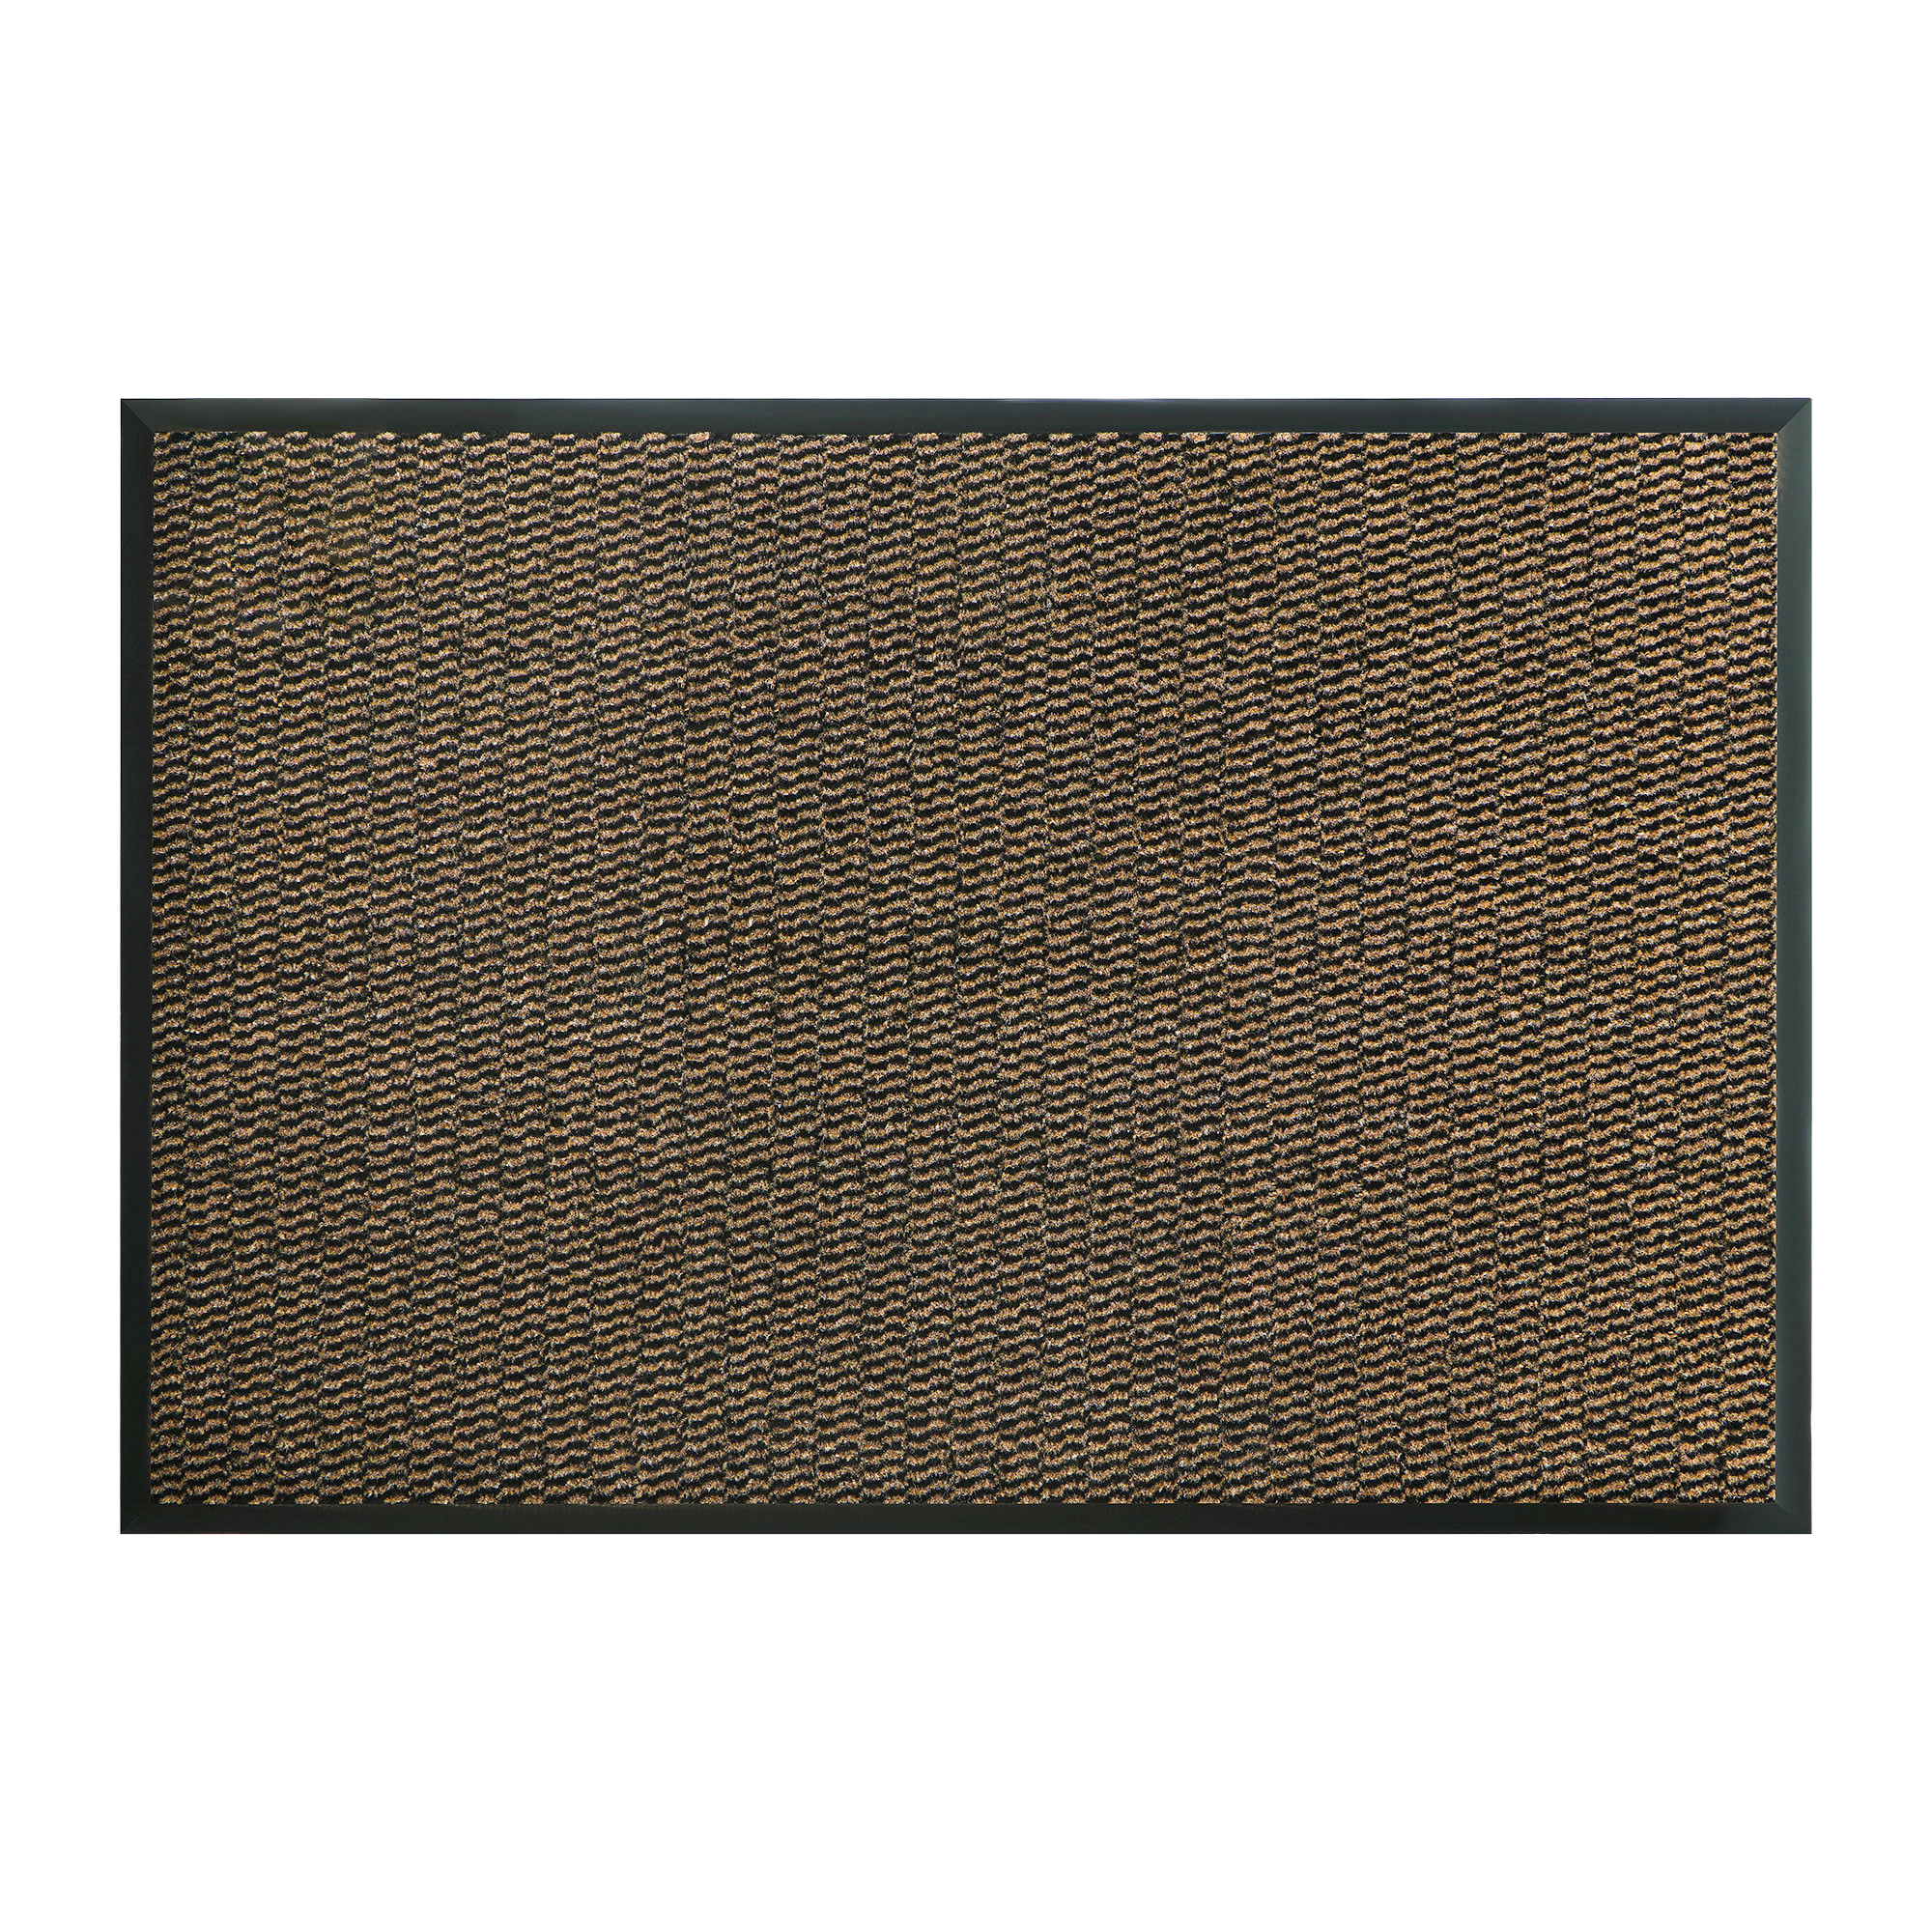 Коврик придверный X Y Carpet Faro Бежевый 60Х90 декоративный коврик sofi de marko 20 бежевый с серым 60х90 см